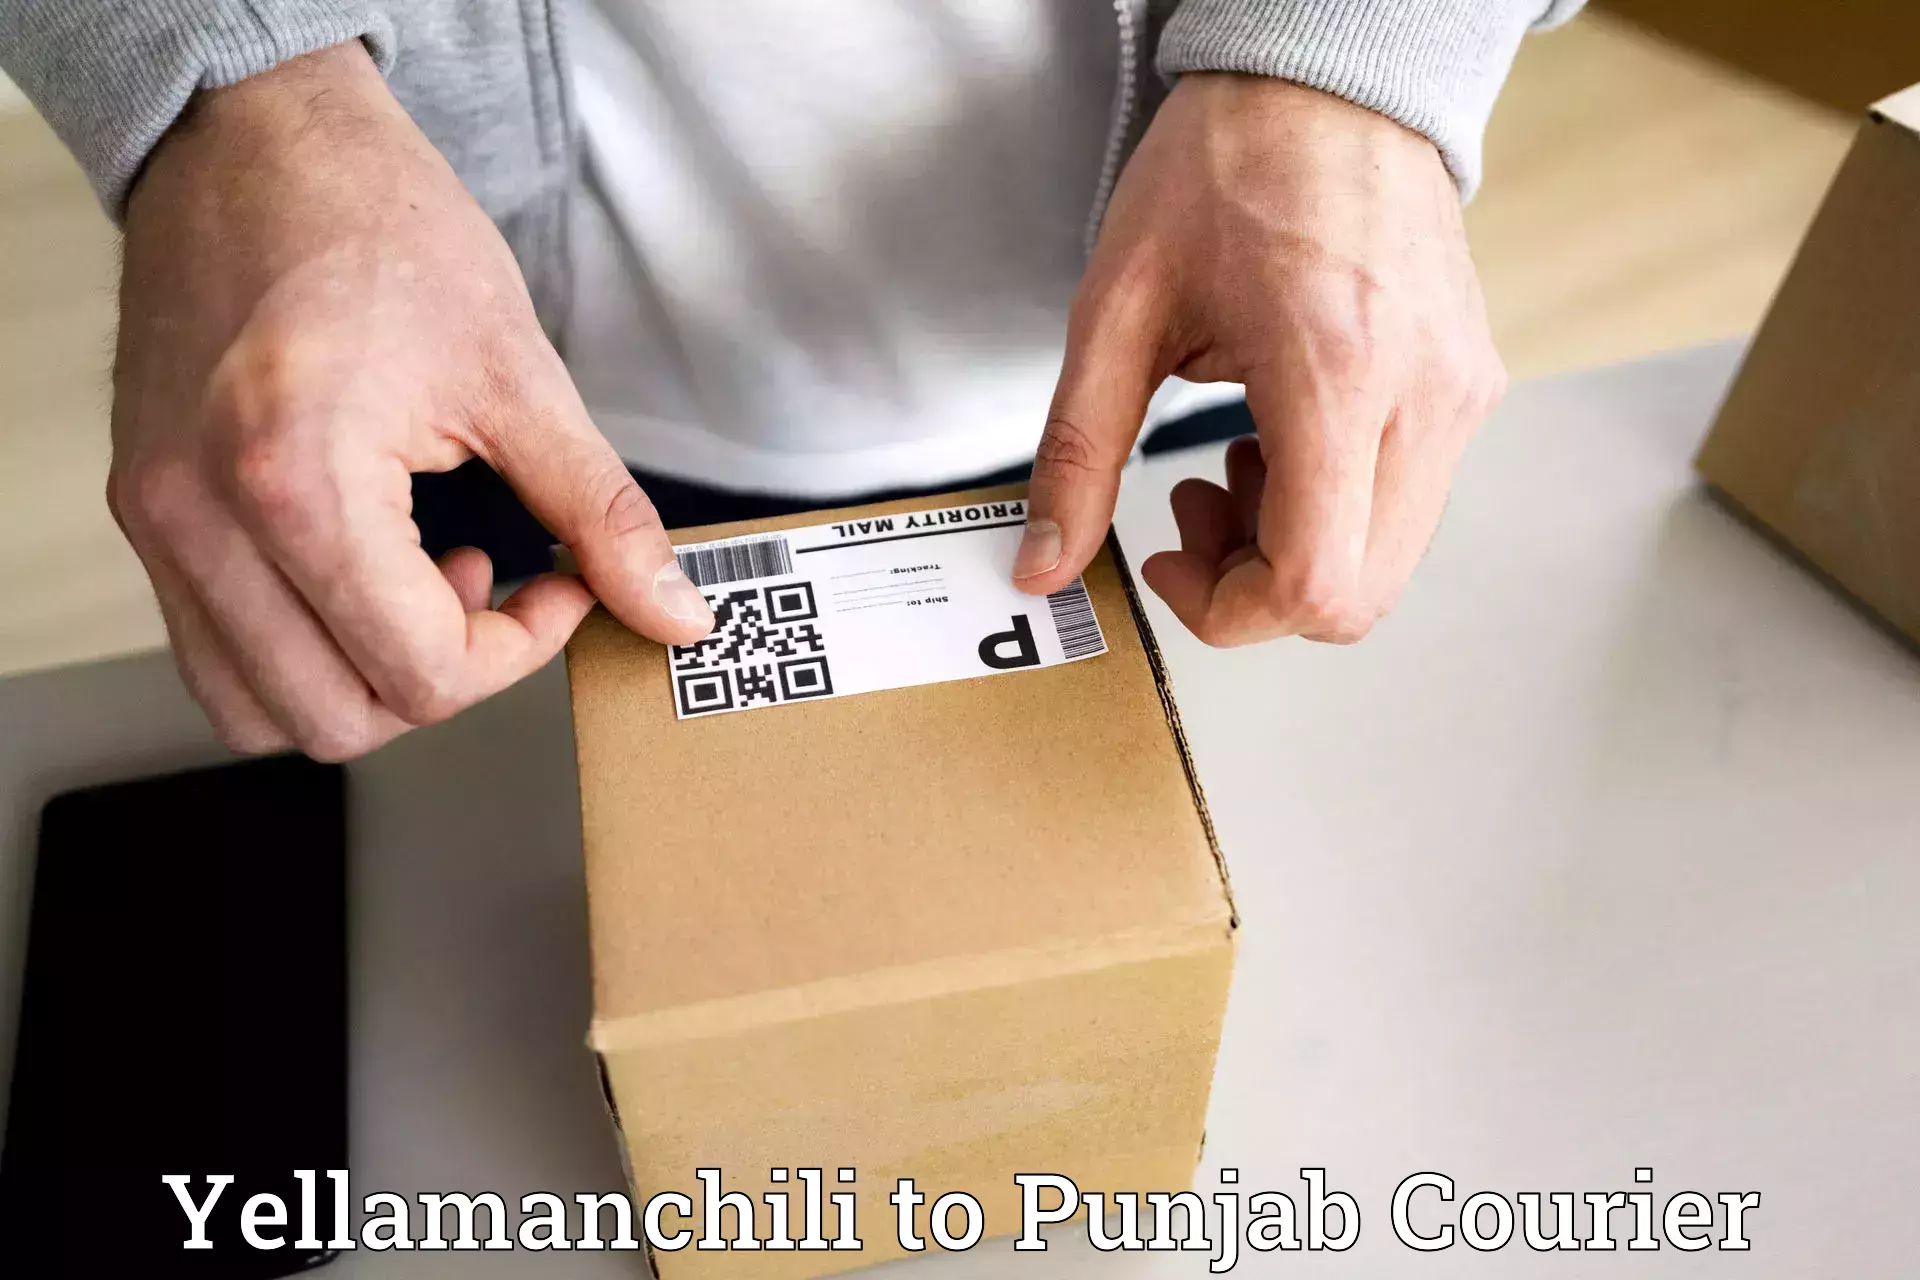 Bulk courier orders Yellamanchili to Begowal